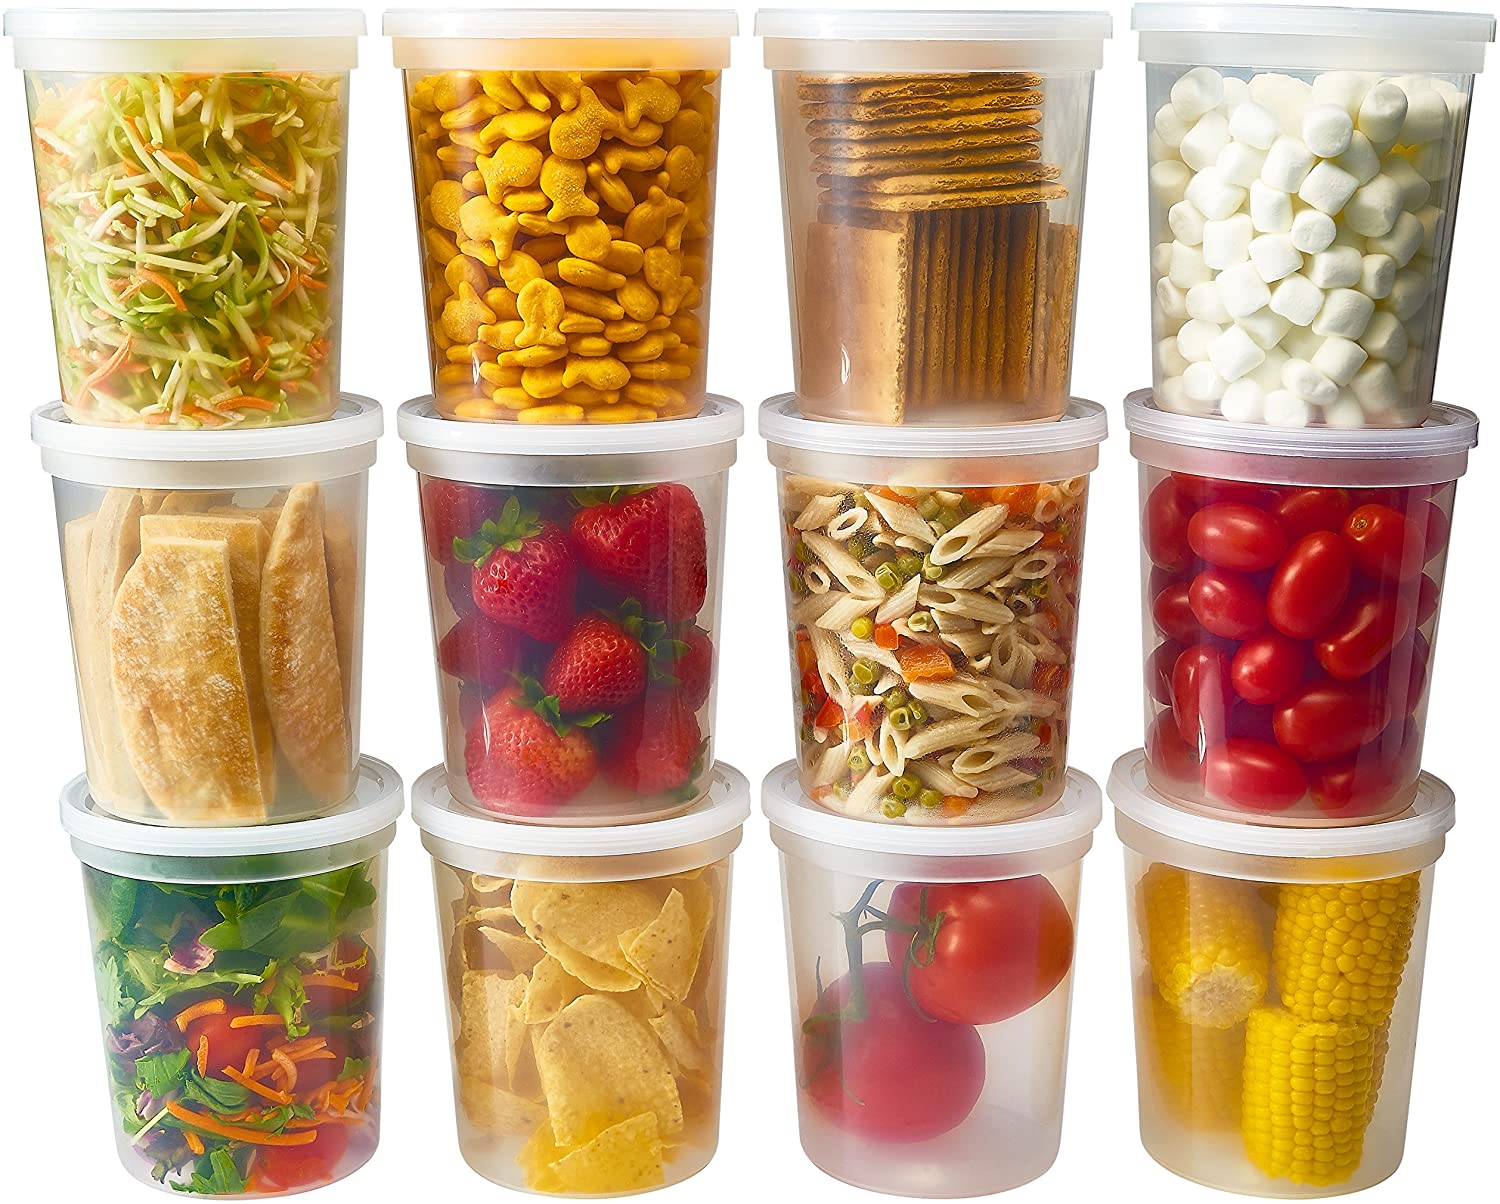 https://www.dontwasteyourmoney.com/wp-content/uploads/2022/01/durahome-microwaveable-clear-plastic-soup-containers-with-lids-24-sets-plastic-soup-containers-with-lids.jpg